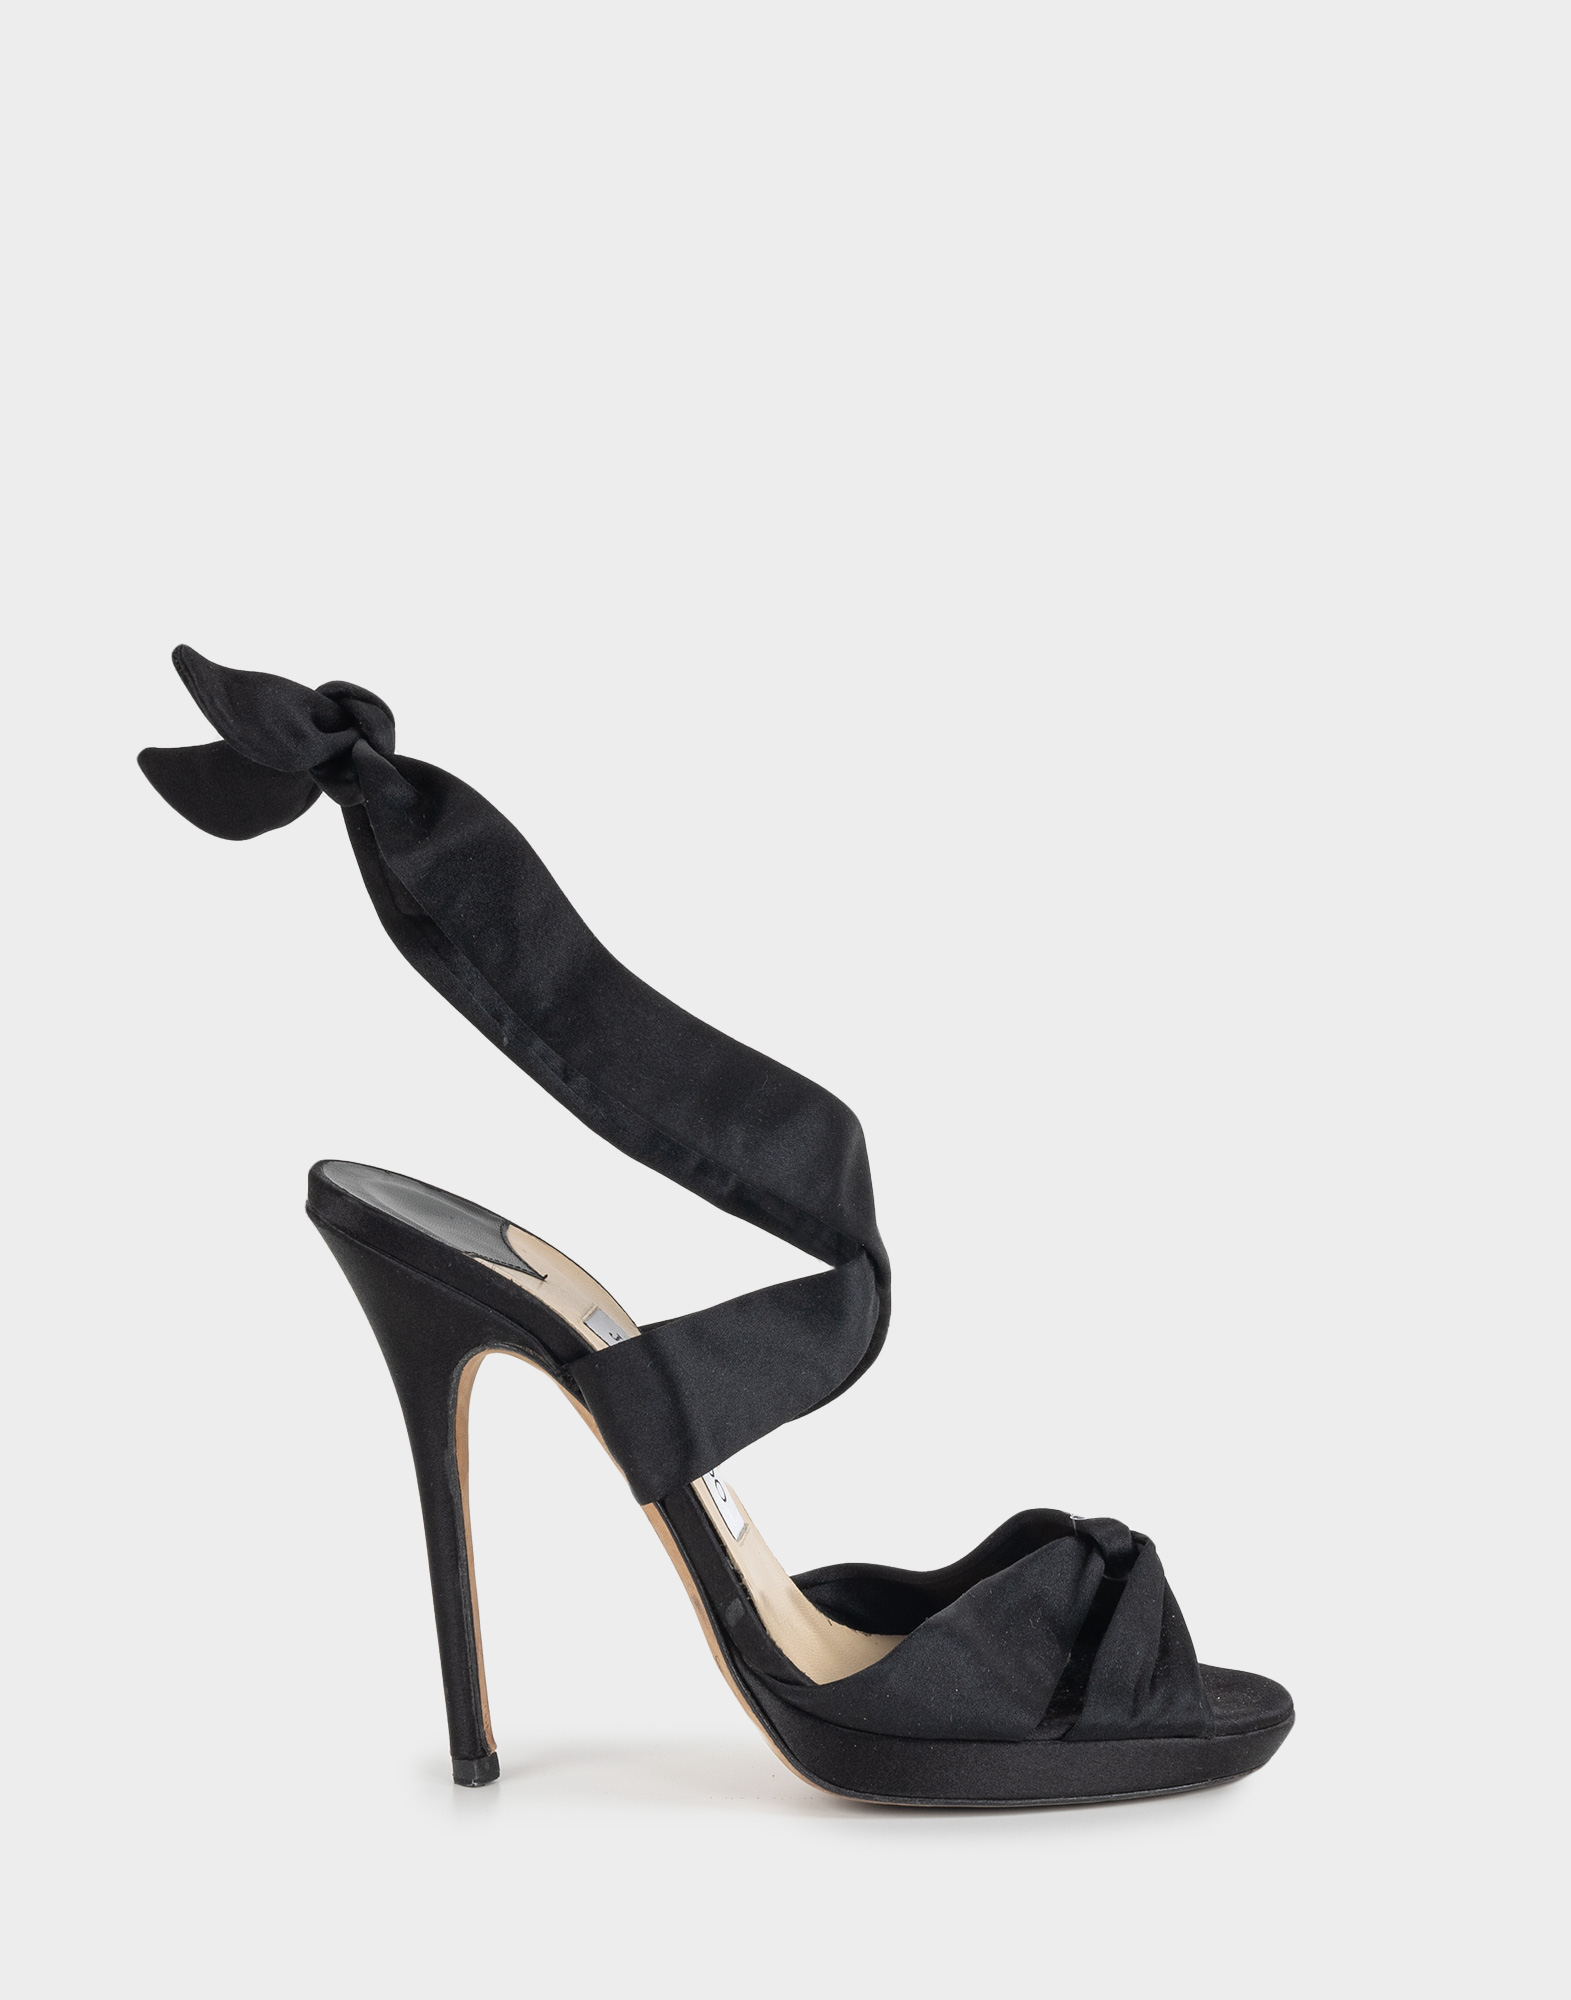 women's black satin ankle strap sandals with stiletto heel